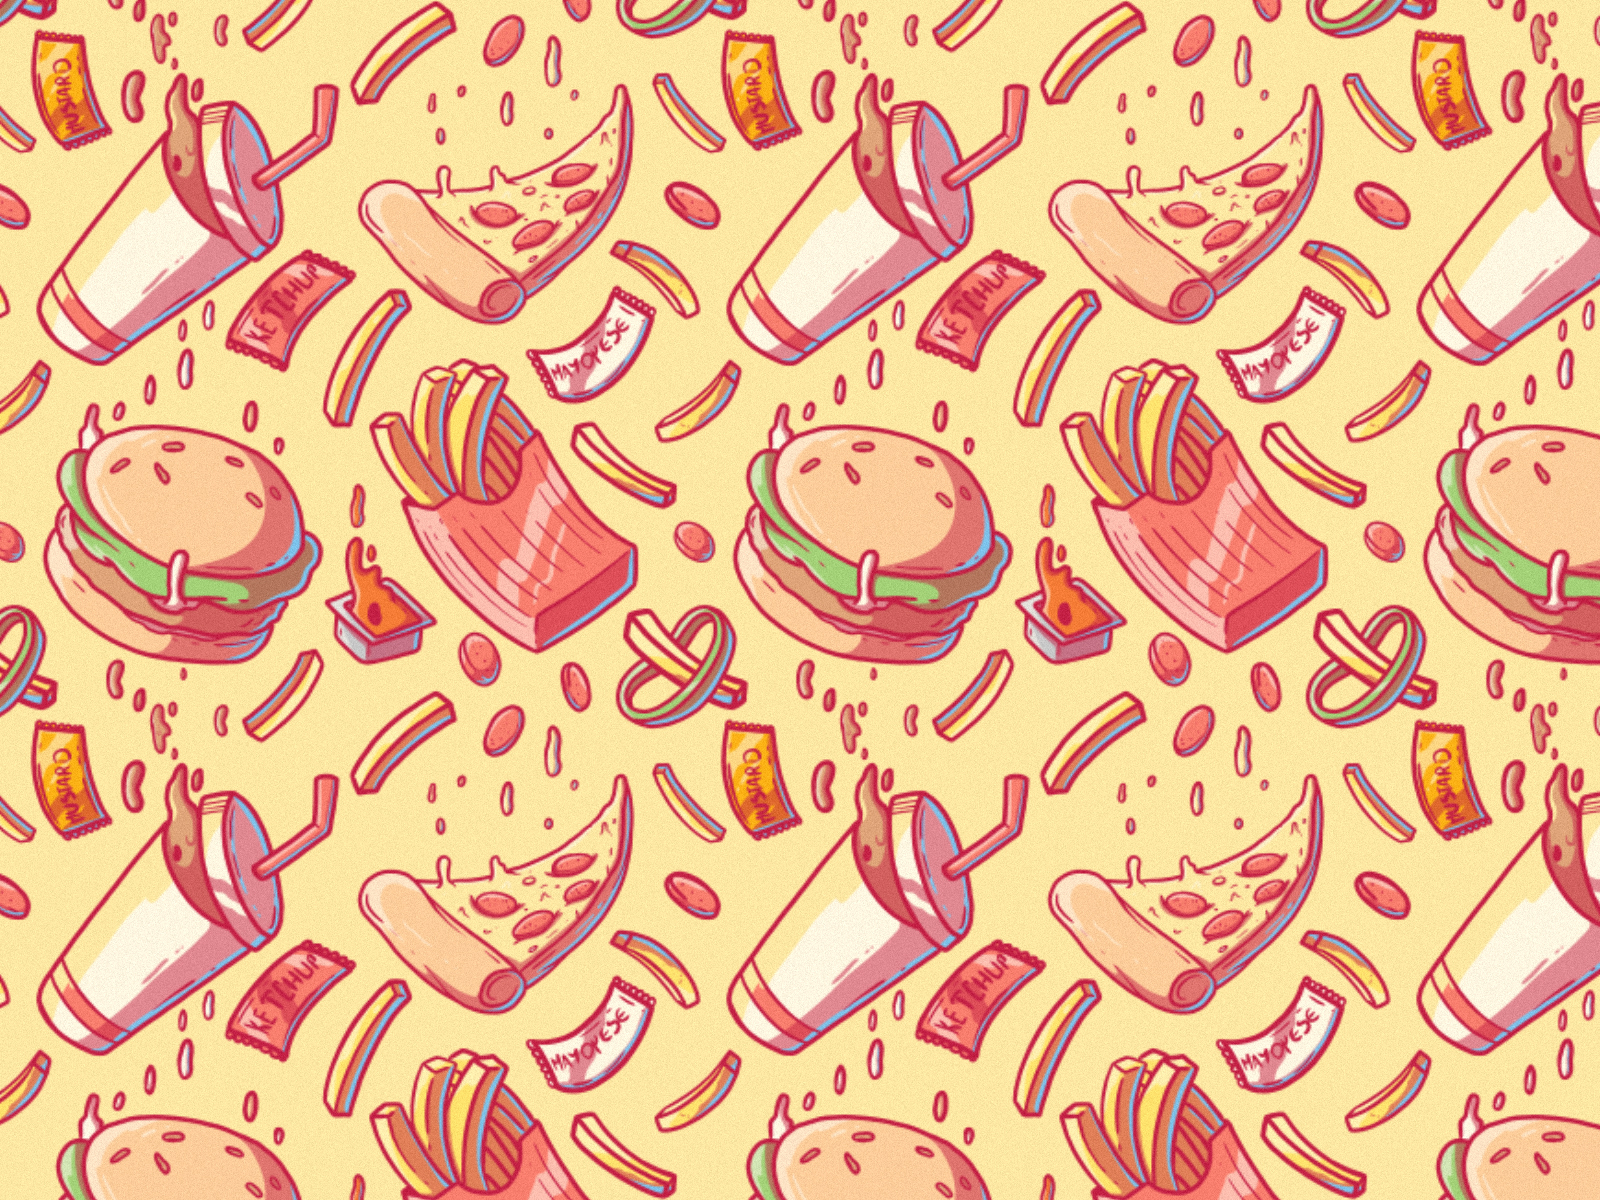 fast-food-pattern-by-pedro-fernandes-on-dribbble